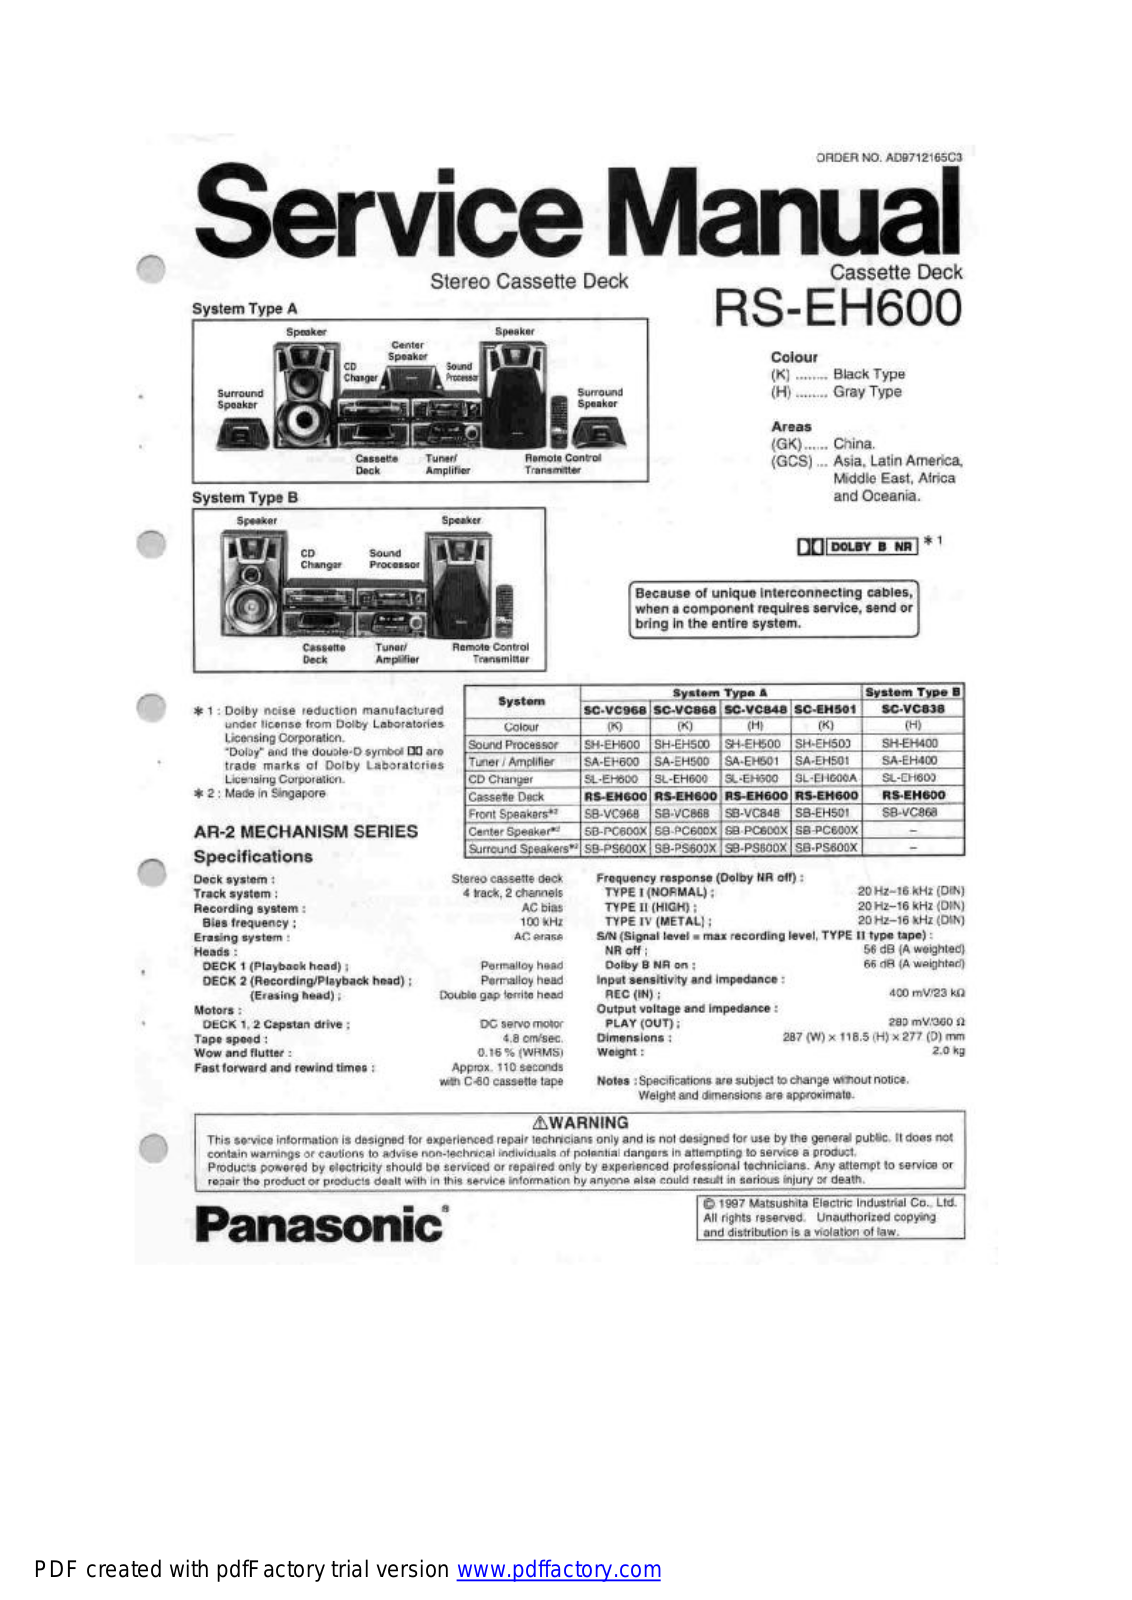 Technics RSEH-600 Service Manual